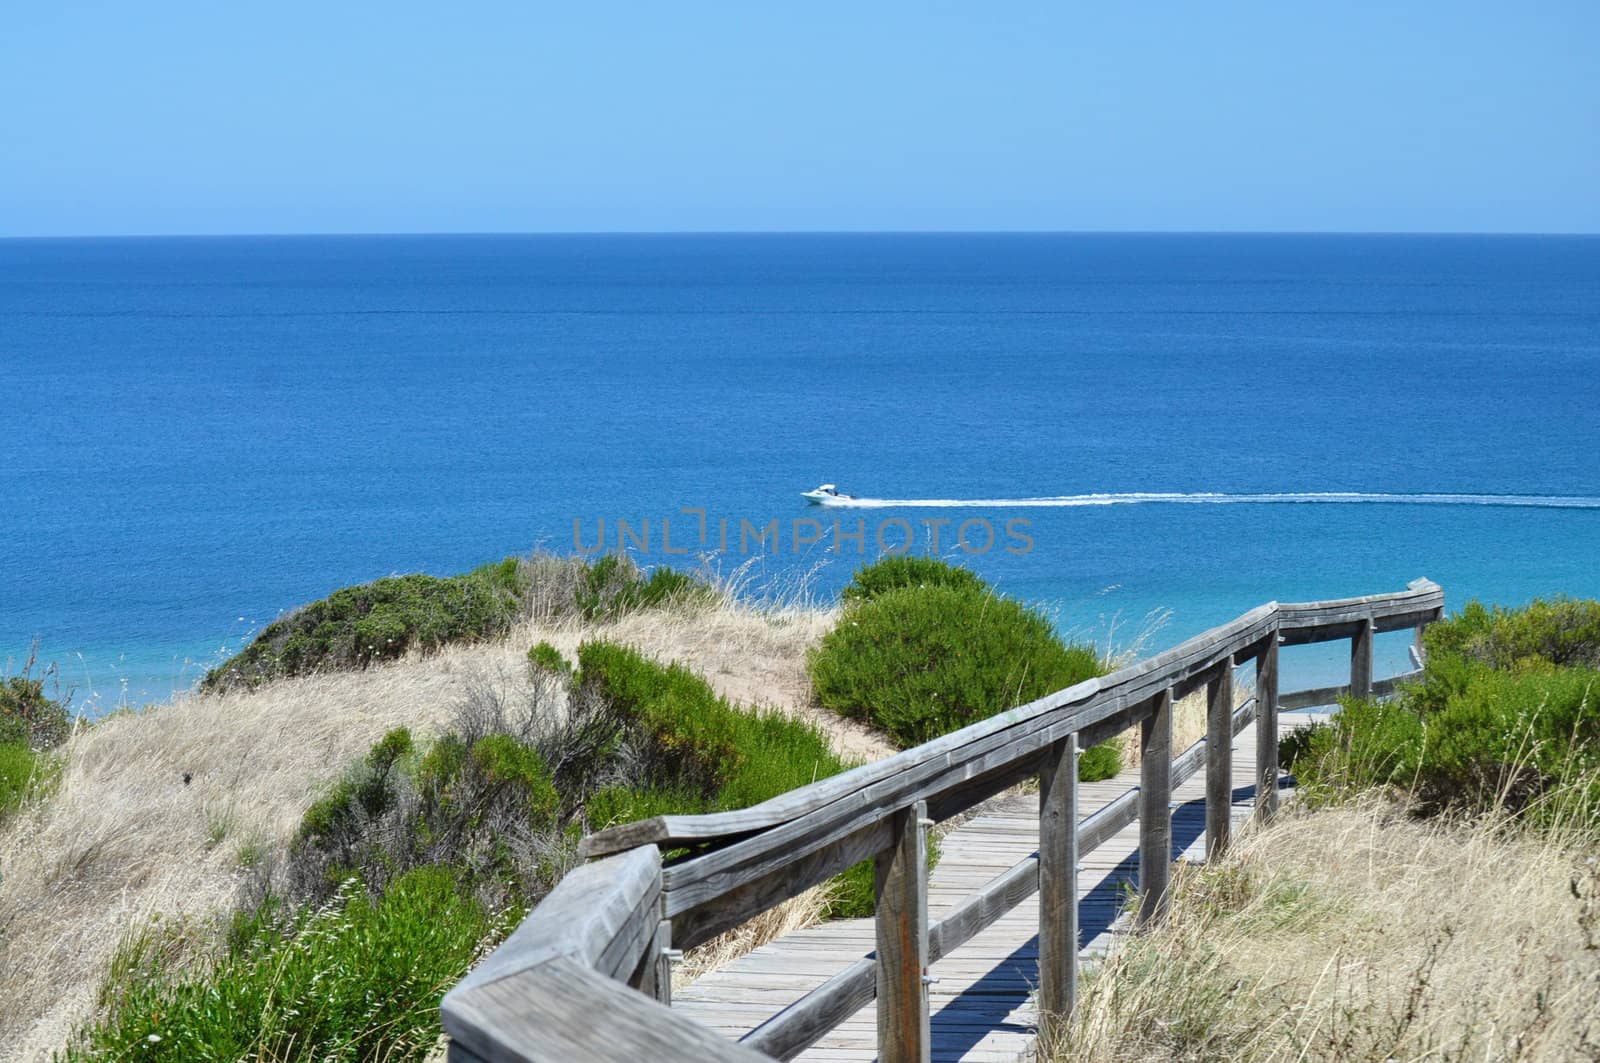 Beautiful azure, blue water coast shore with footpath. Hallett Cove Conservation Park, South Australia. by dimkadimon